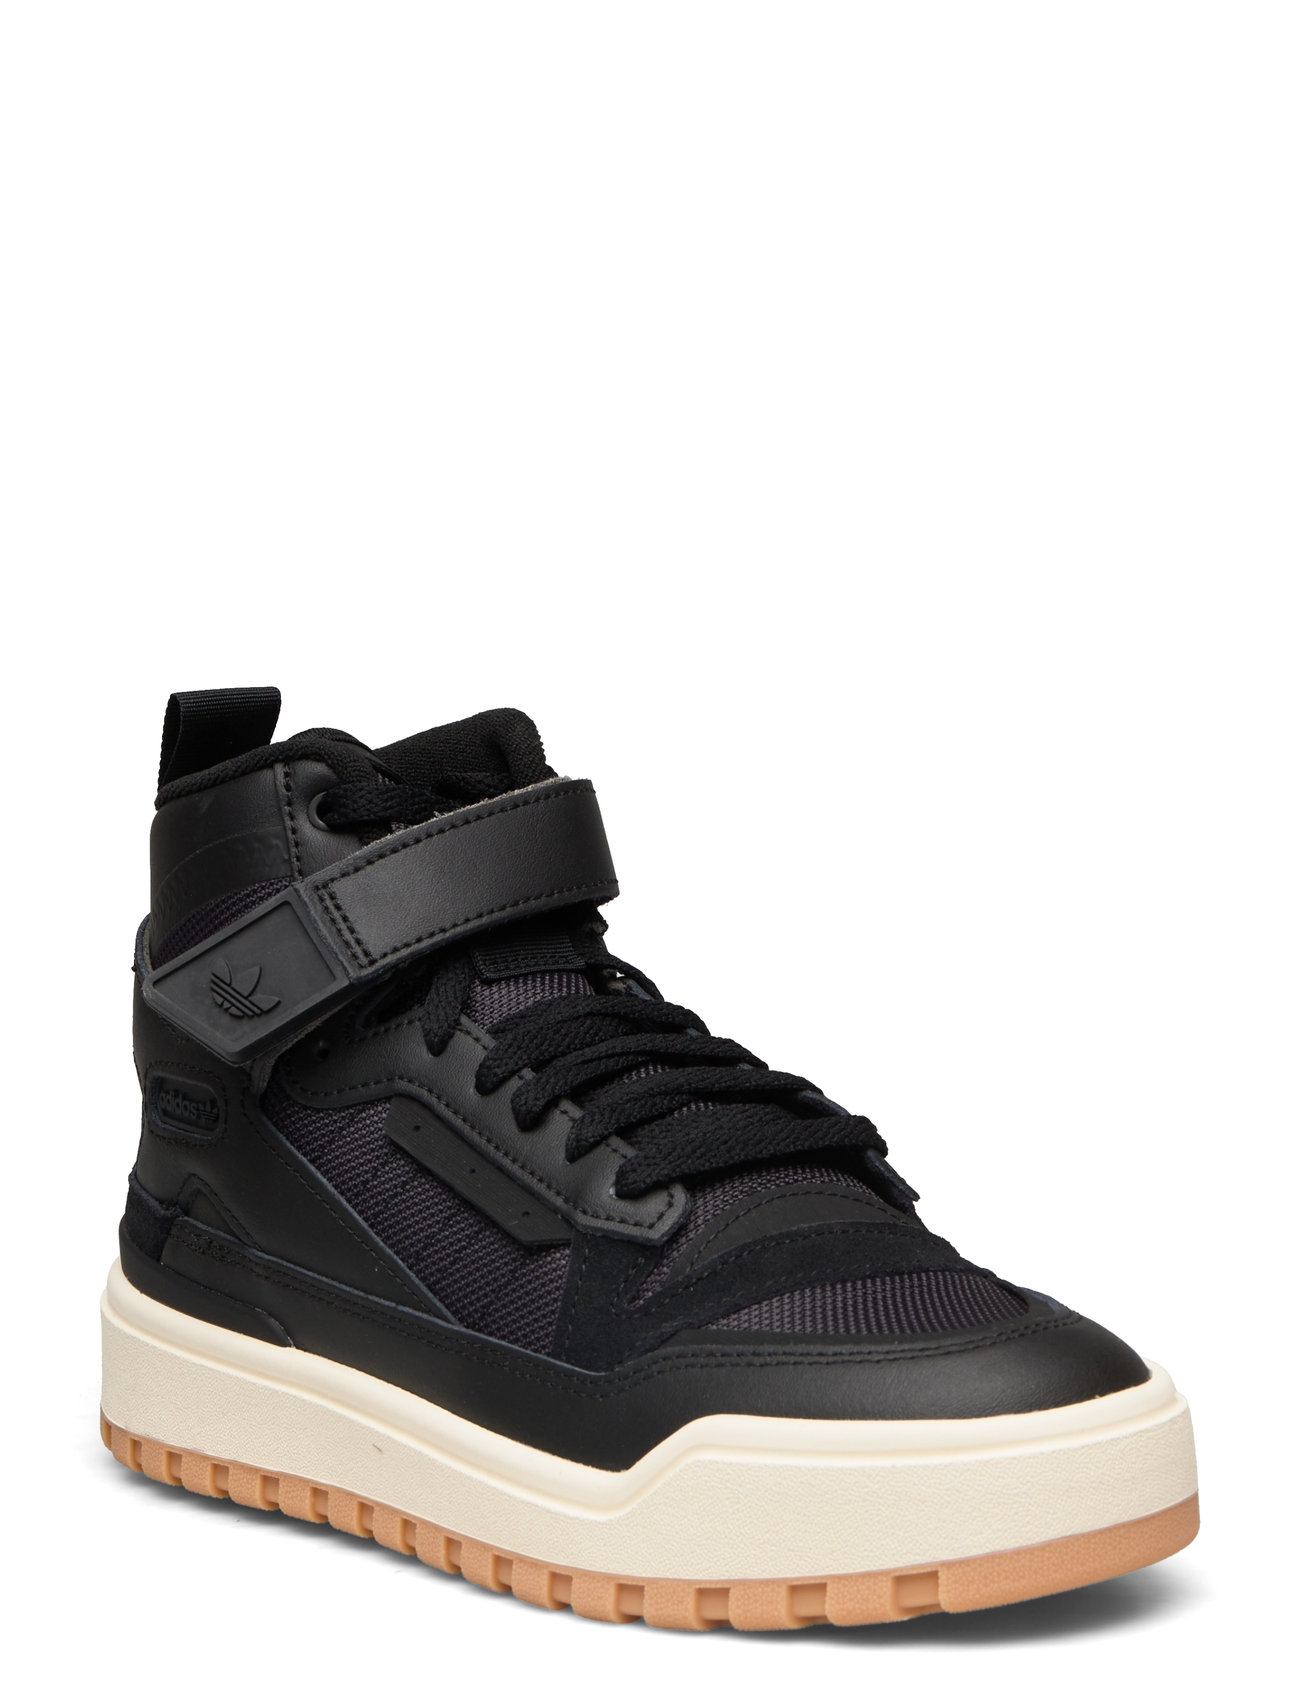 Forum Boot Shoes Sport Sneakers High-top Sneakers Black Adidas Originals